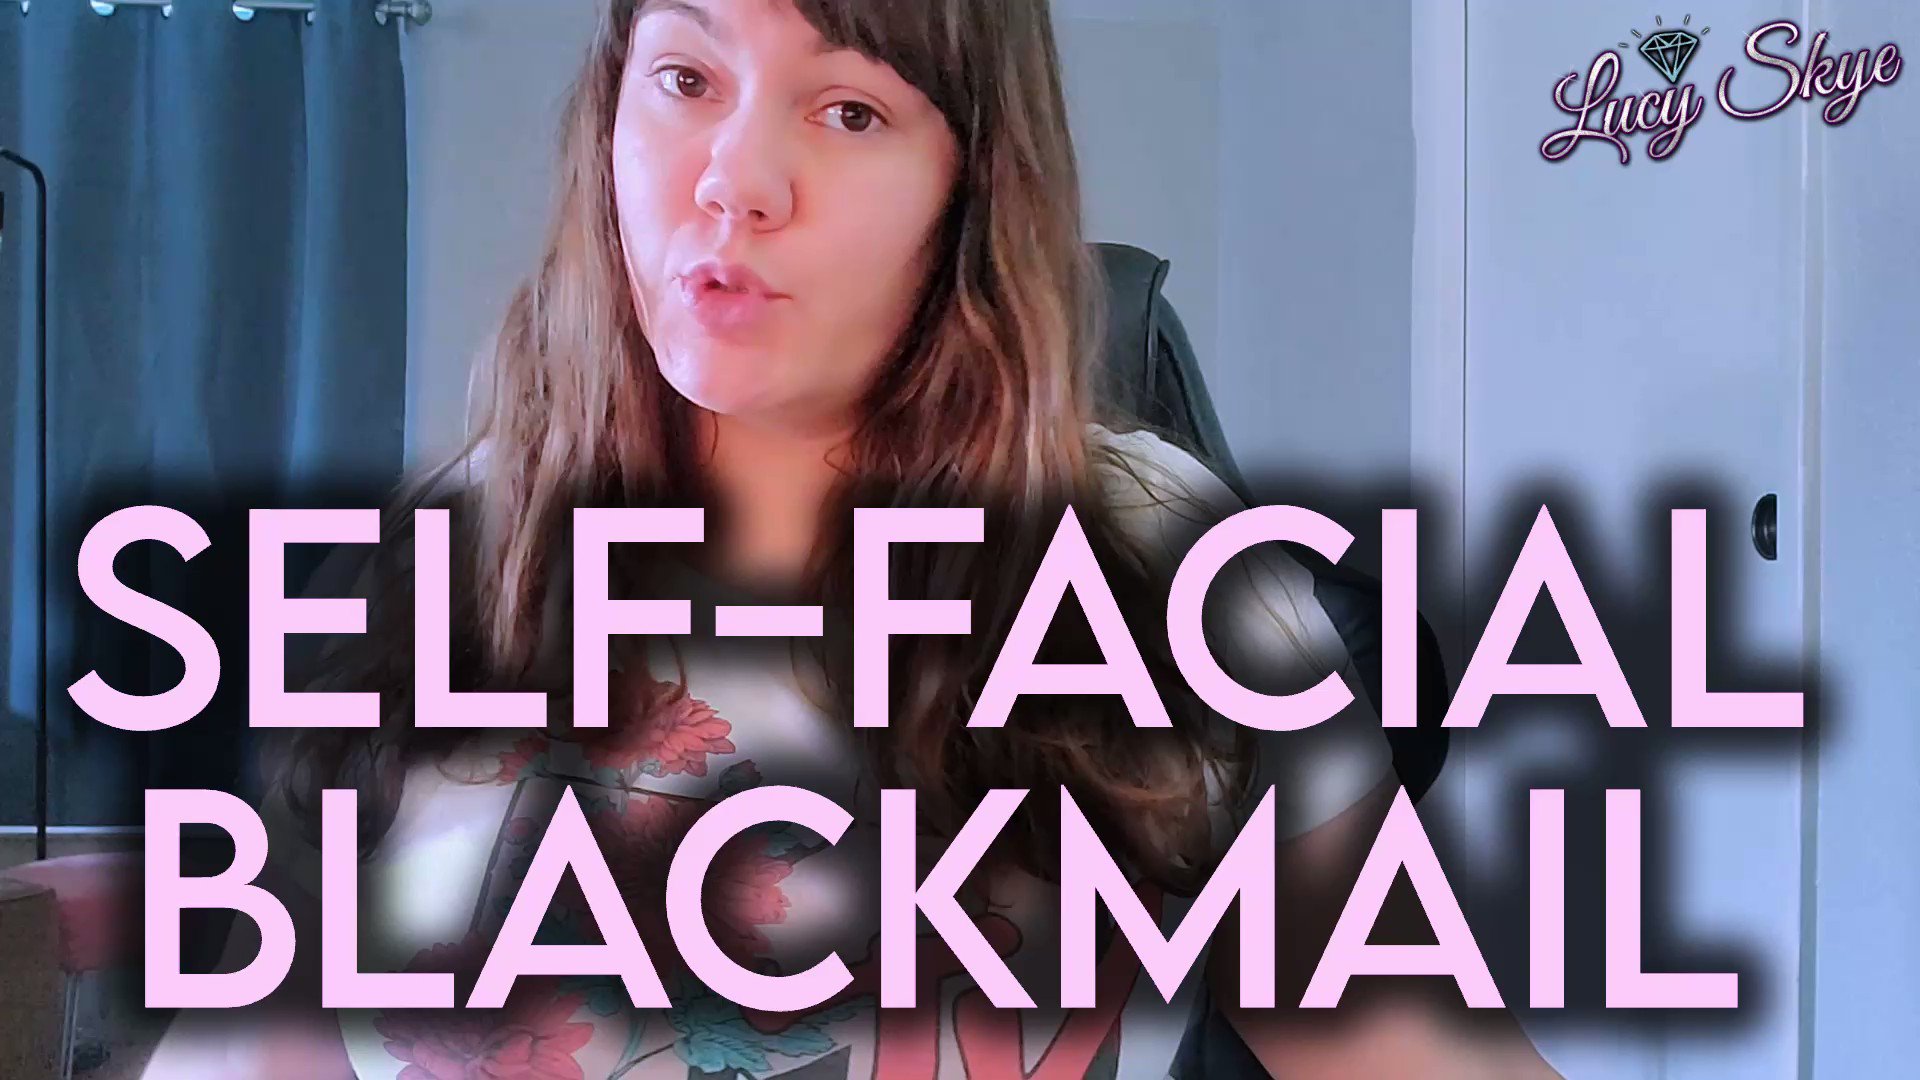 Lucy Skye Promo On Twitter New Clip Release Self Facial Blackmail 5yd6jjjds6